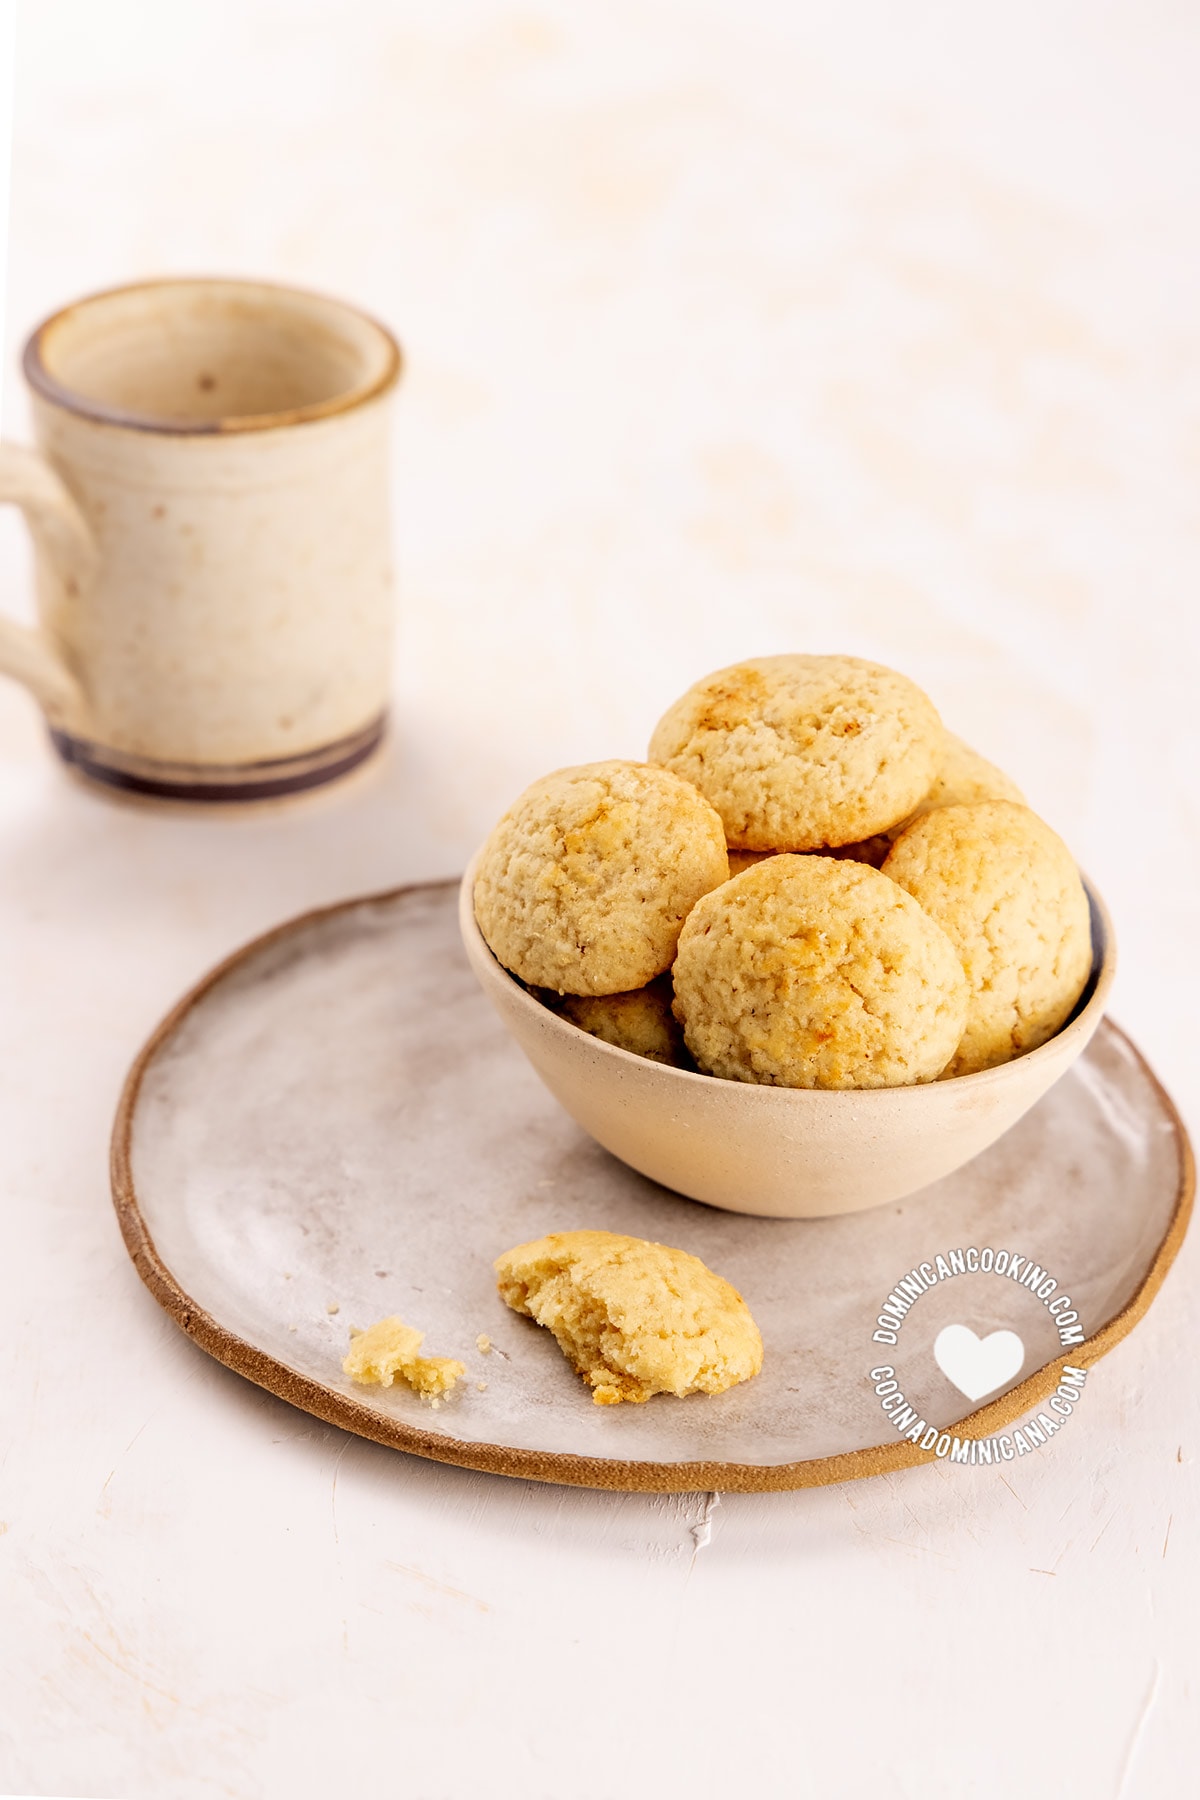 Mantecaditos (Butter Cookies)